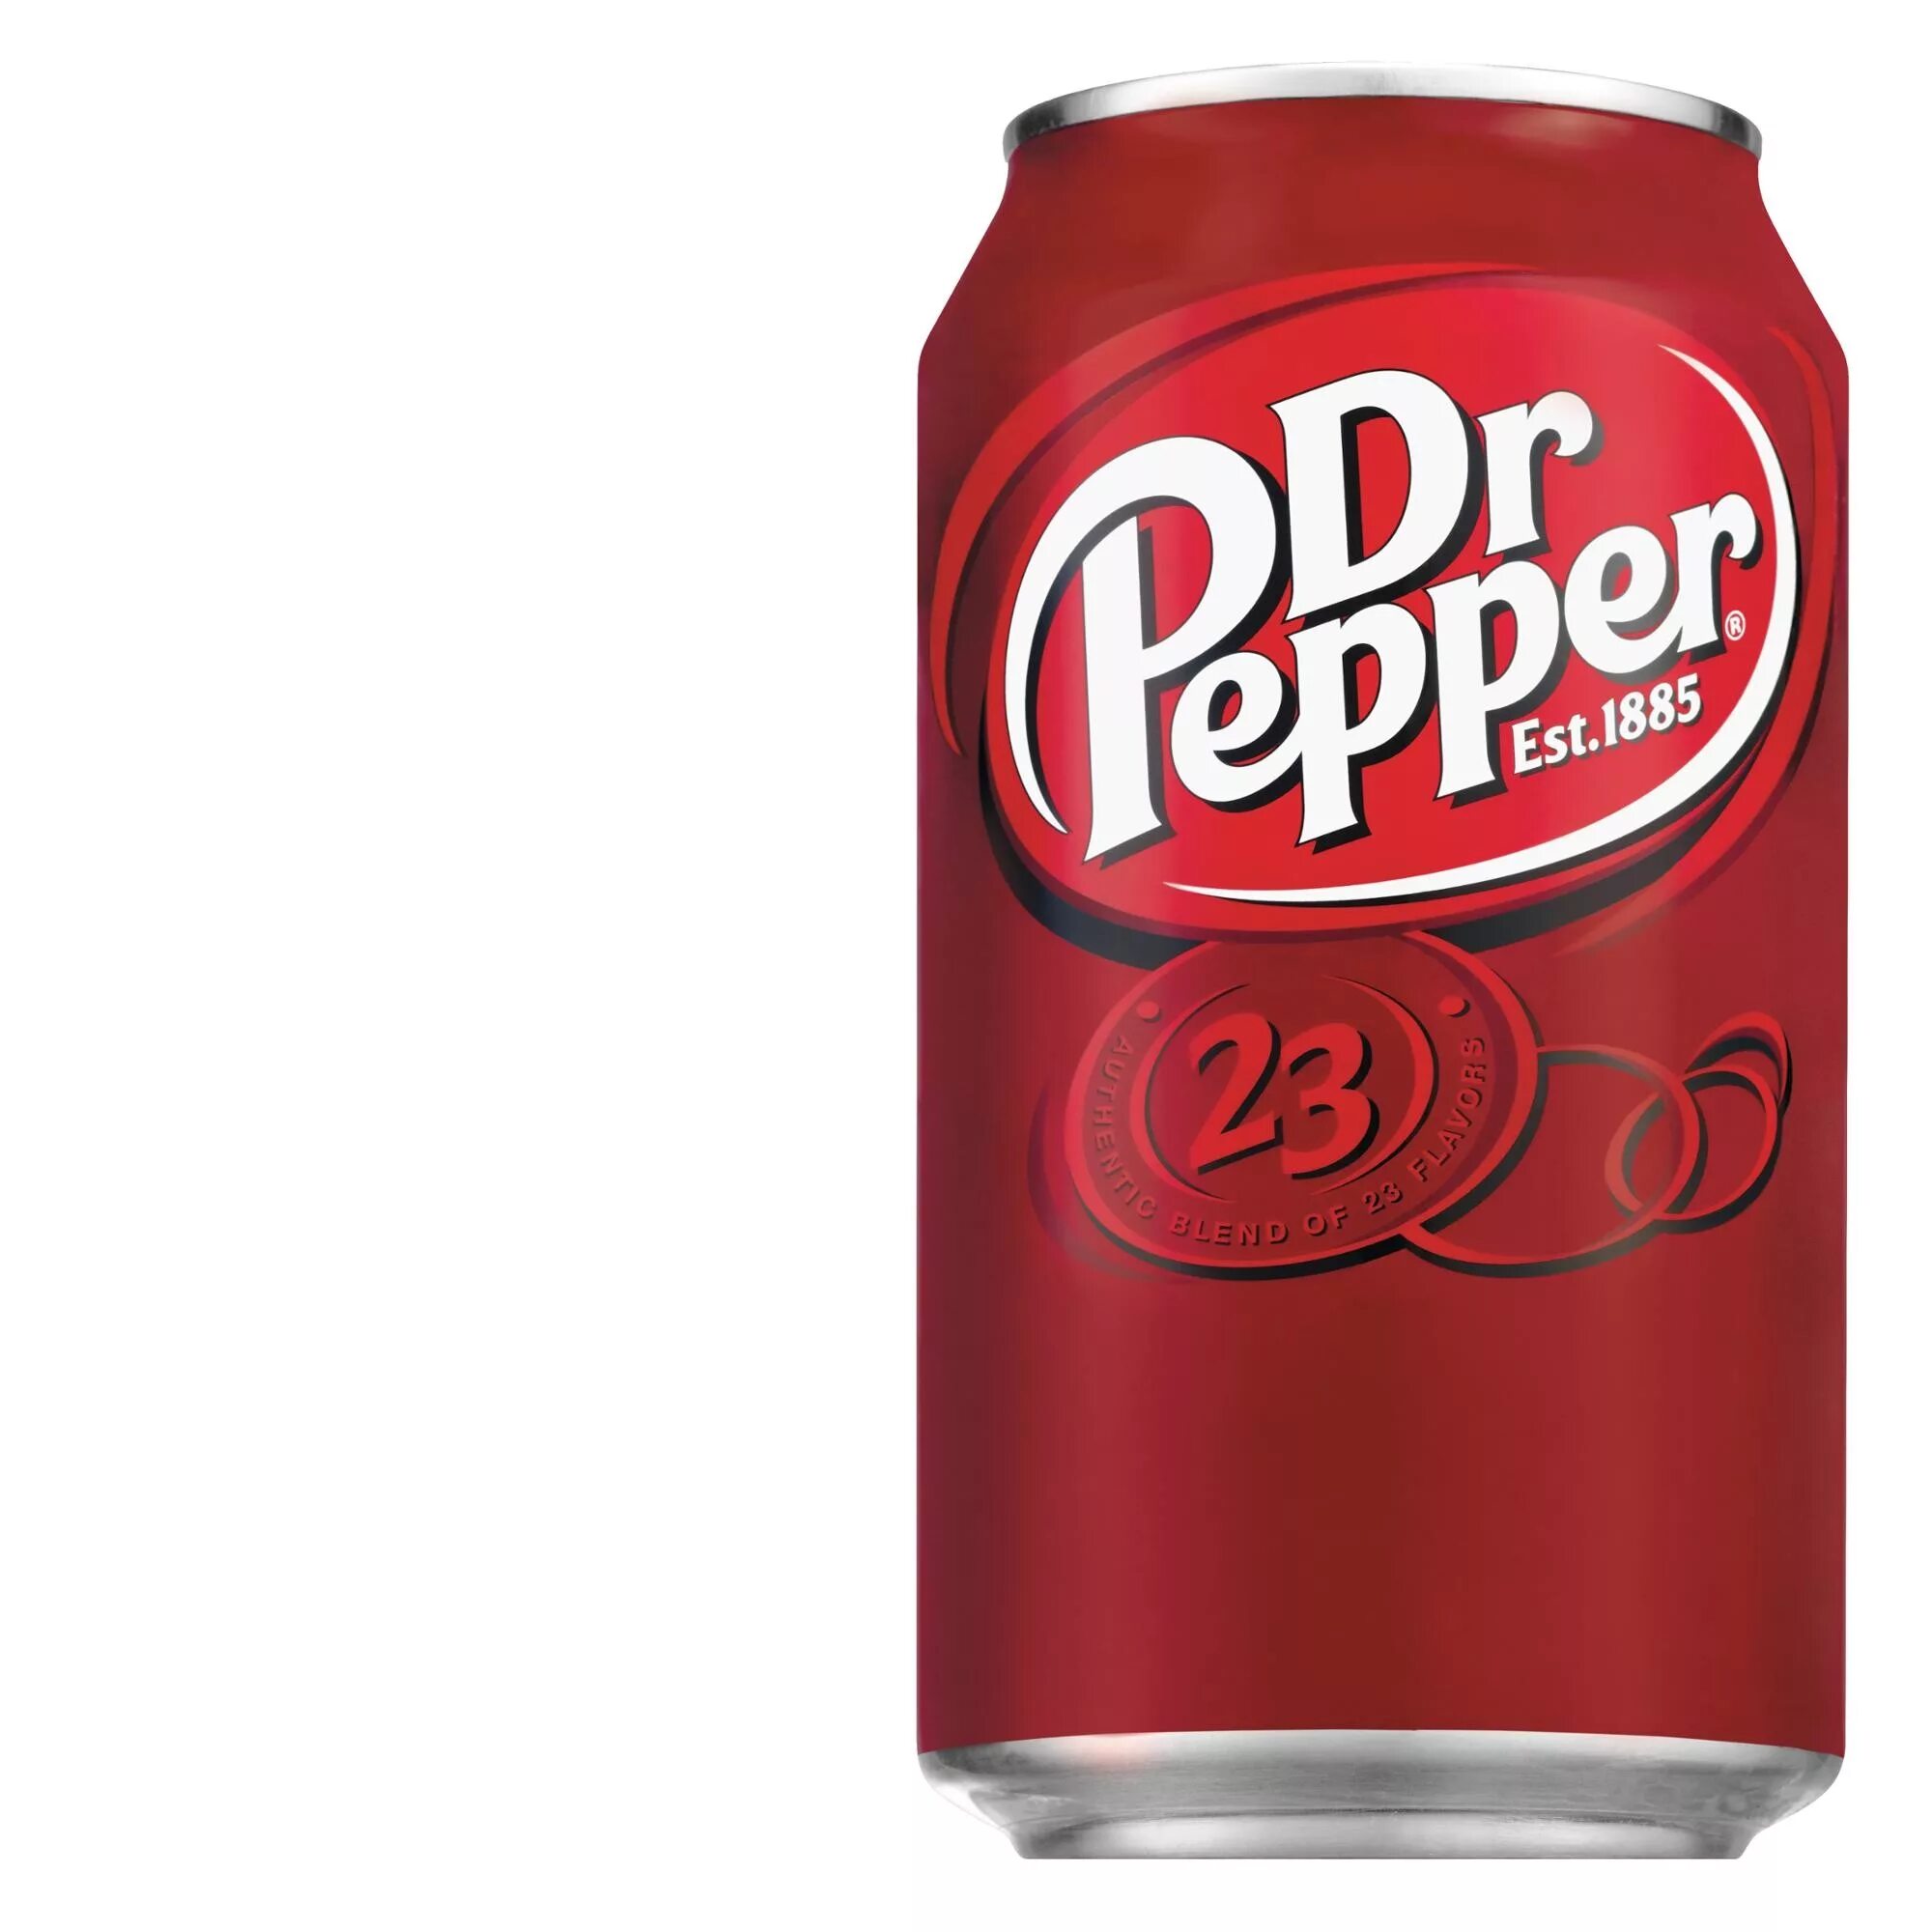 Pepper напиток. Доктор Пеппер Энергетик. Доктор Пеппер зеленый. Доктор Пеппер 1885. Доктор Пеппер вкусы.